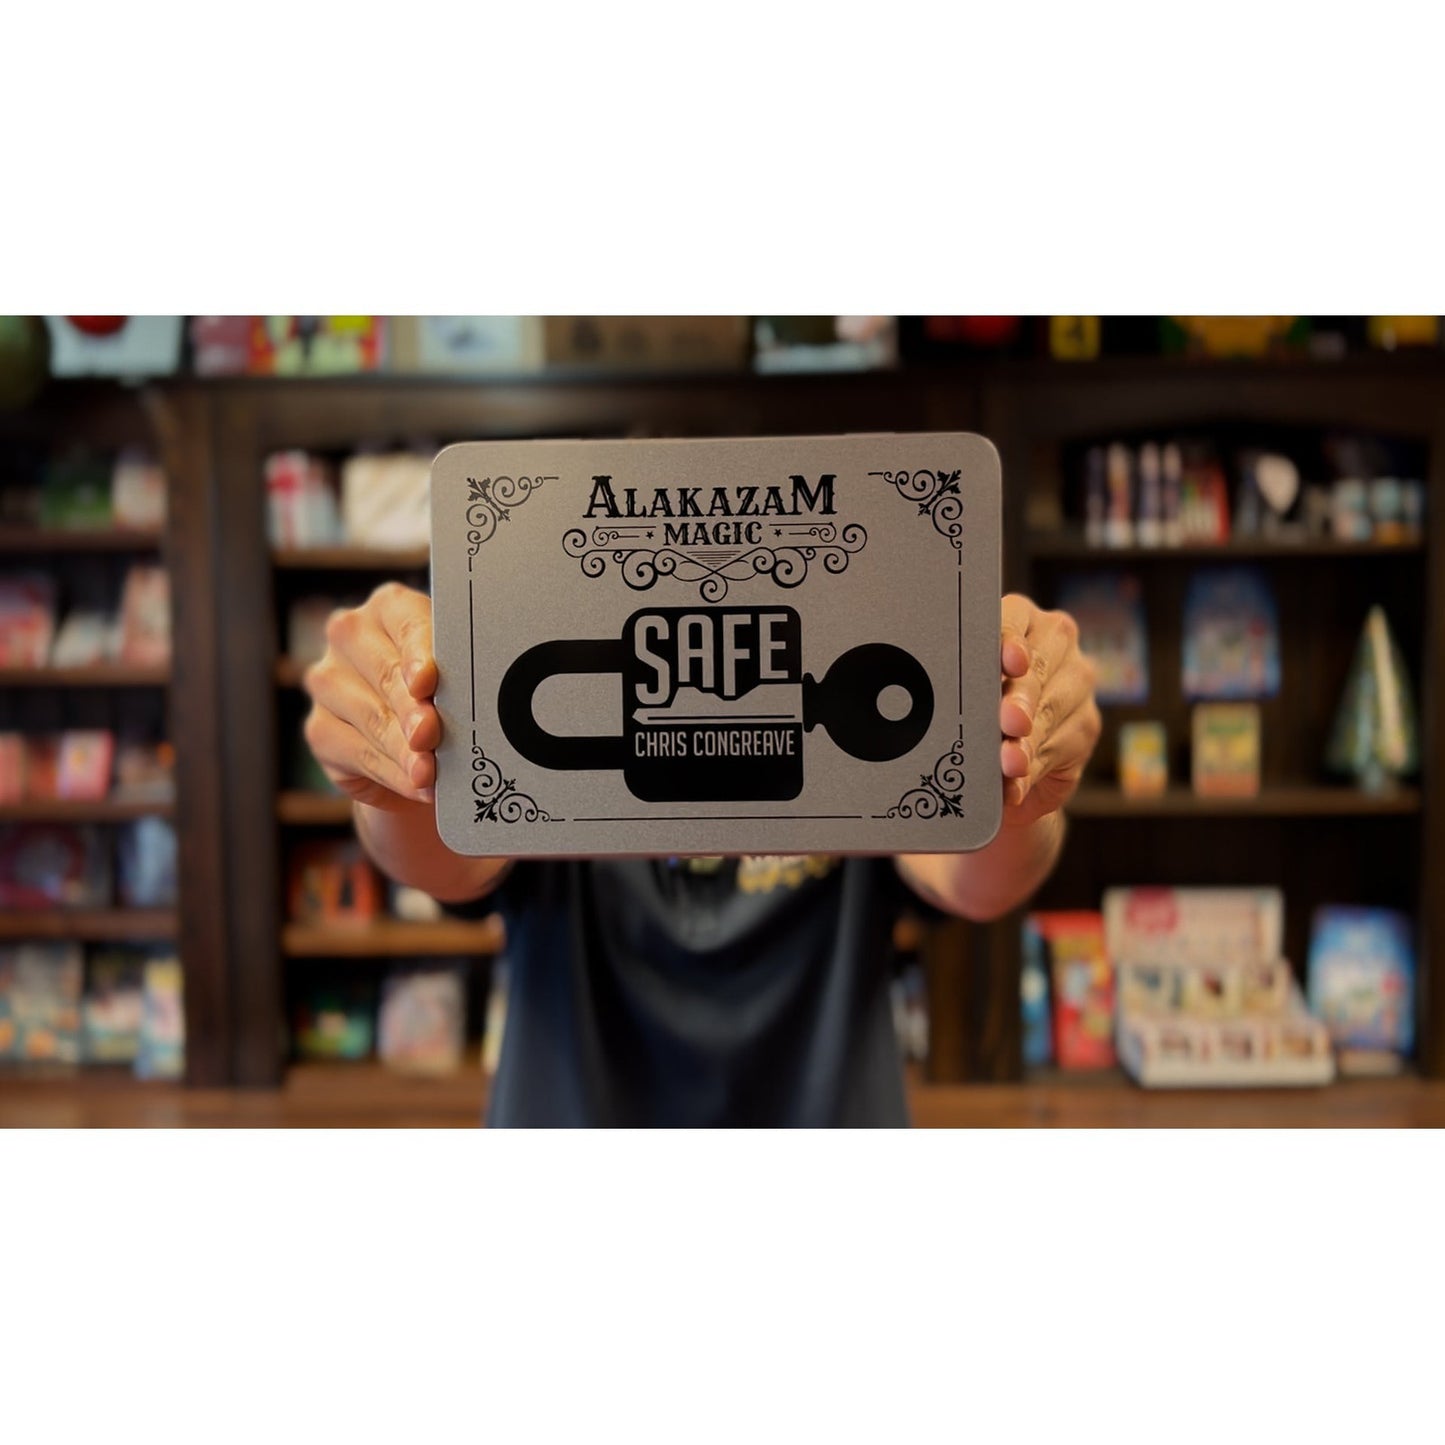 Alakazam Magic presents Safe by Chris Congreave